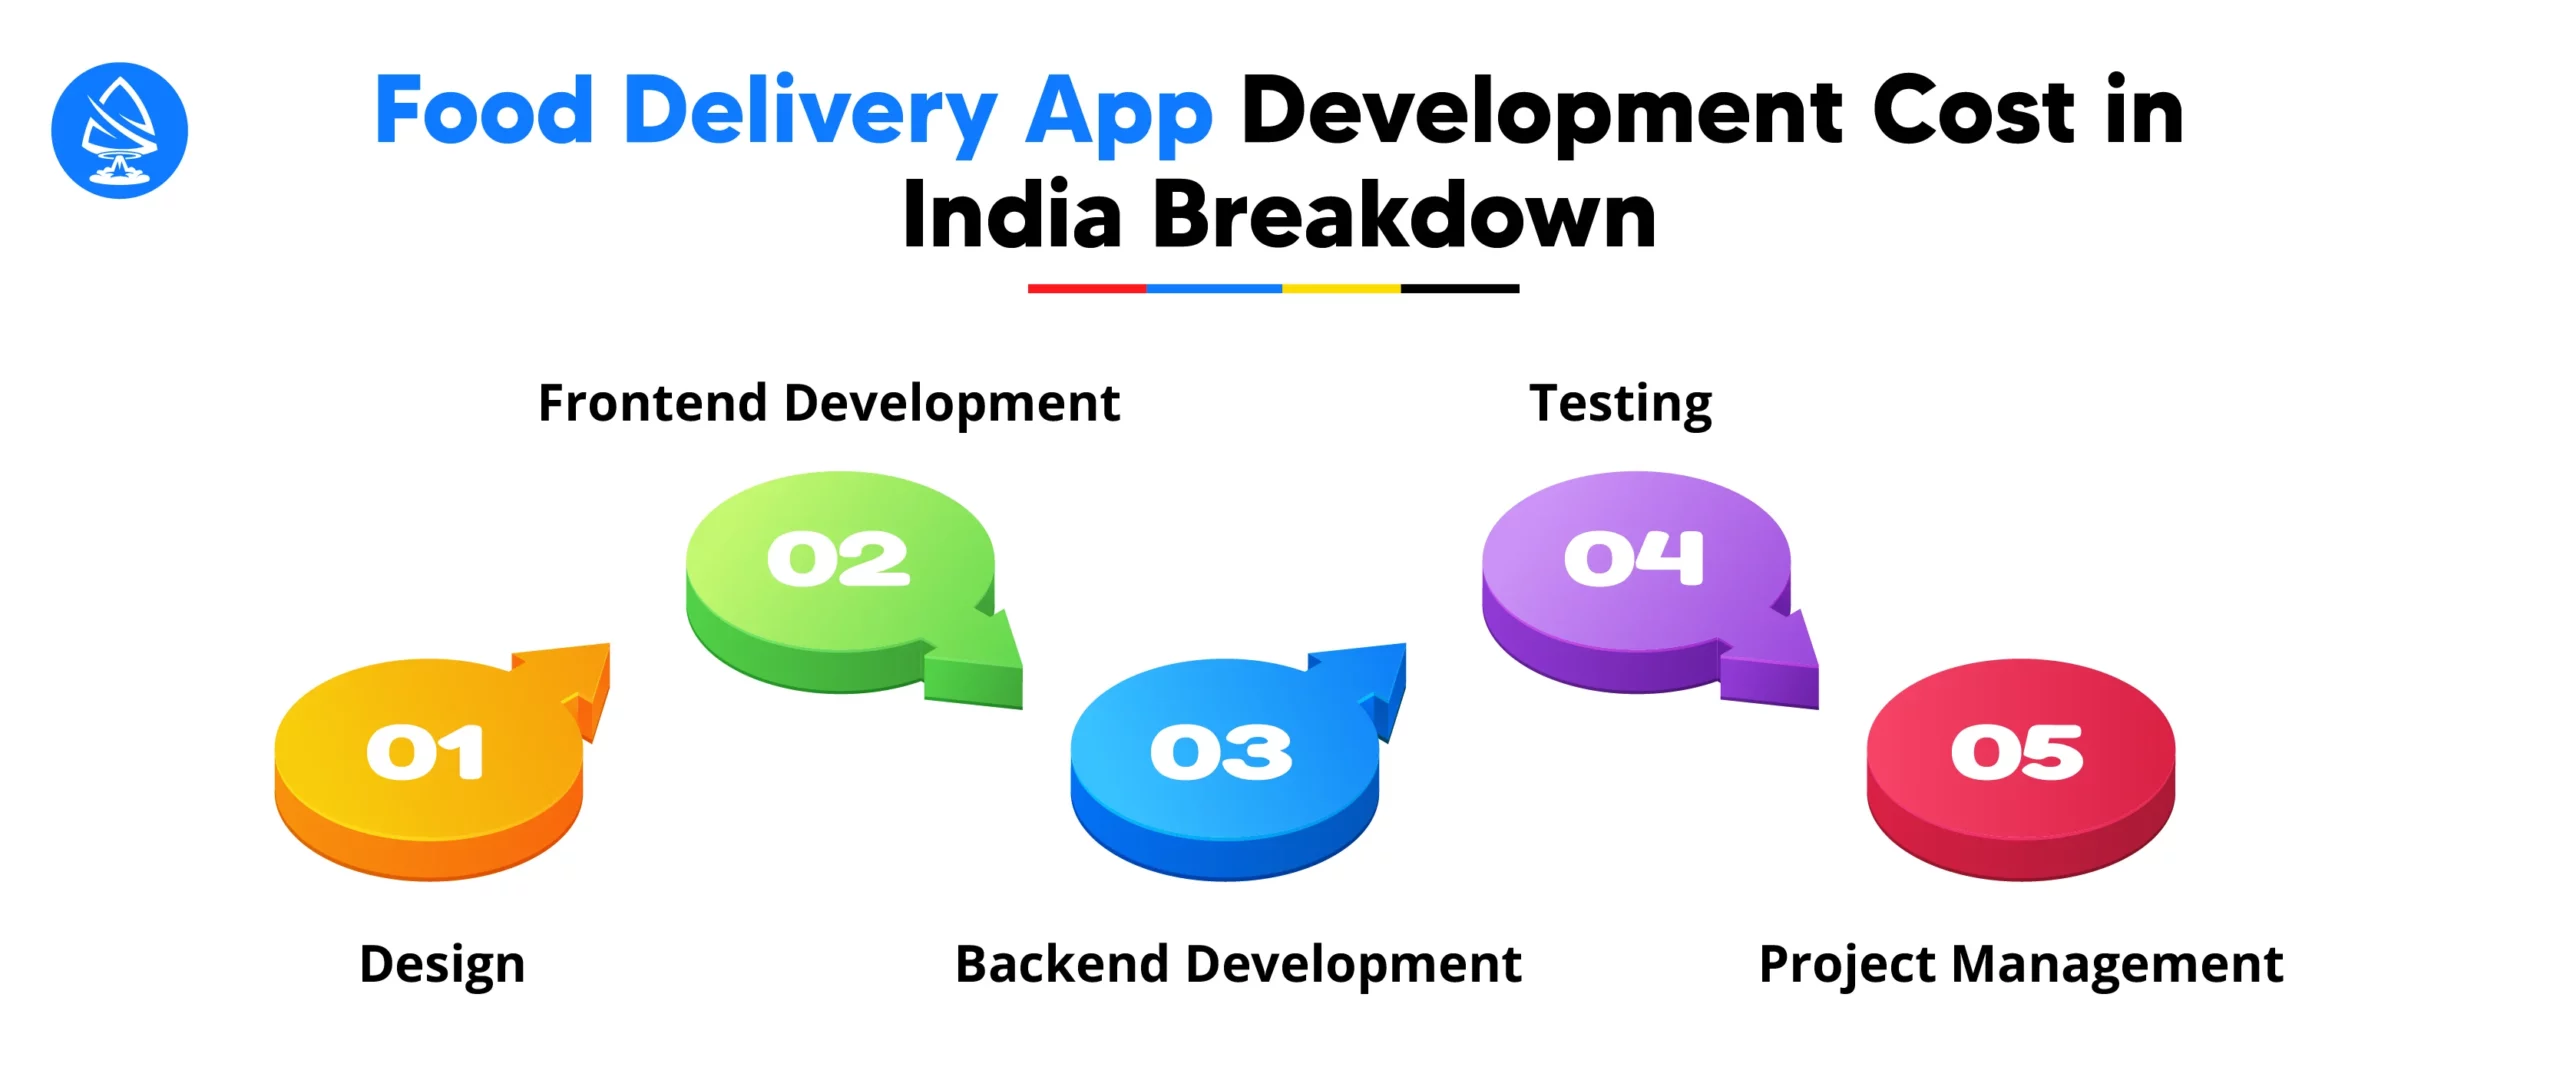 Food Delivery App Development Cost in India Breakdown